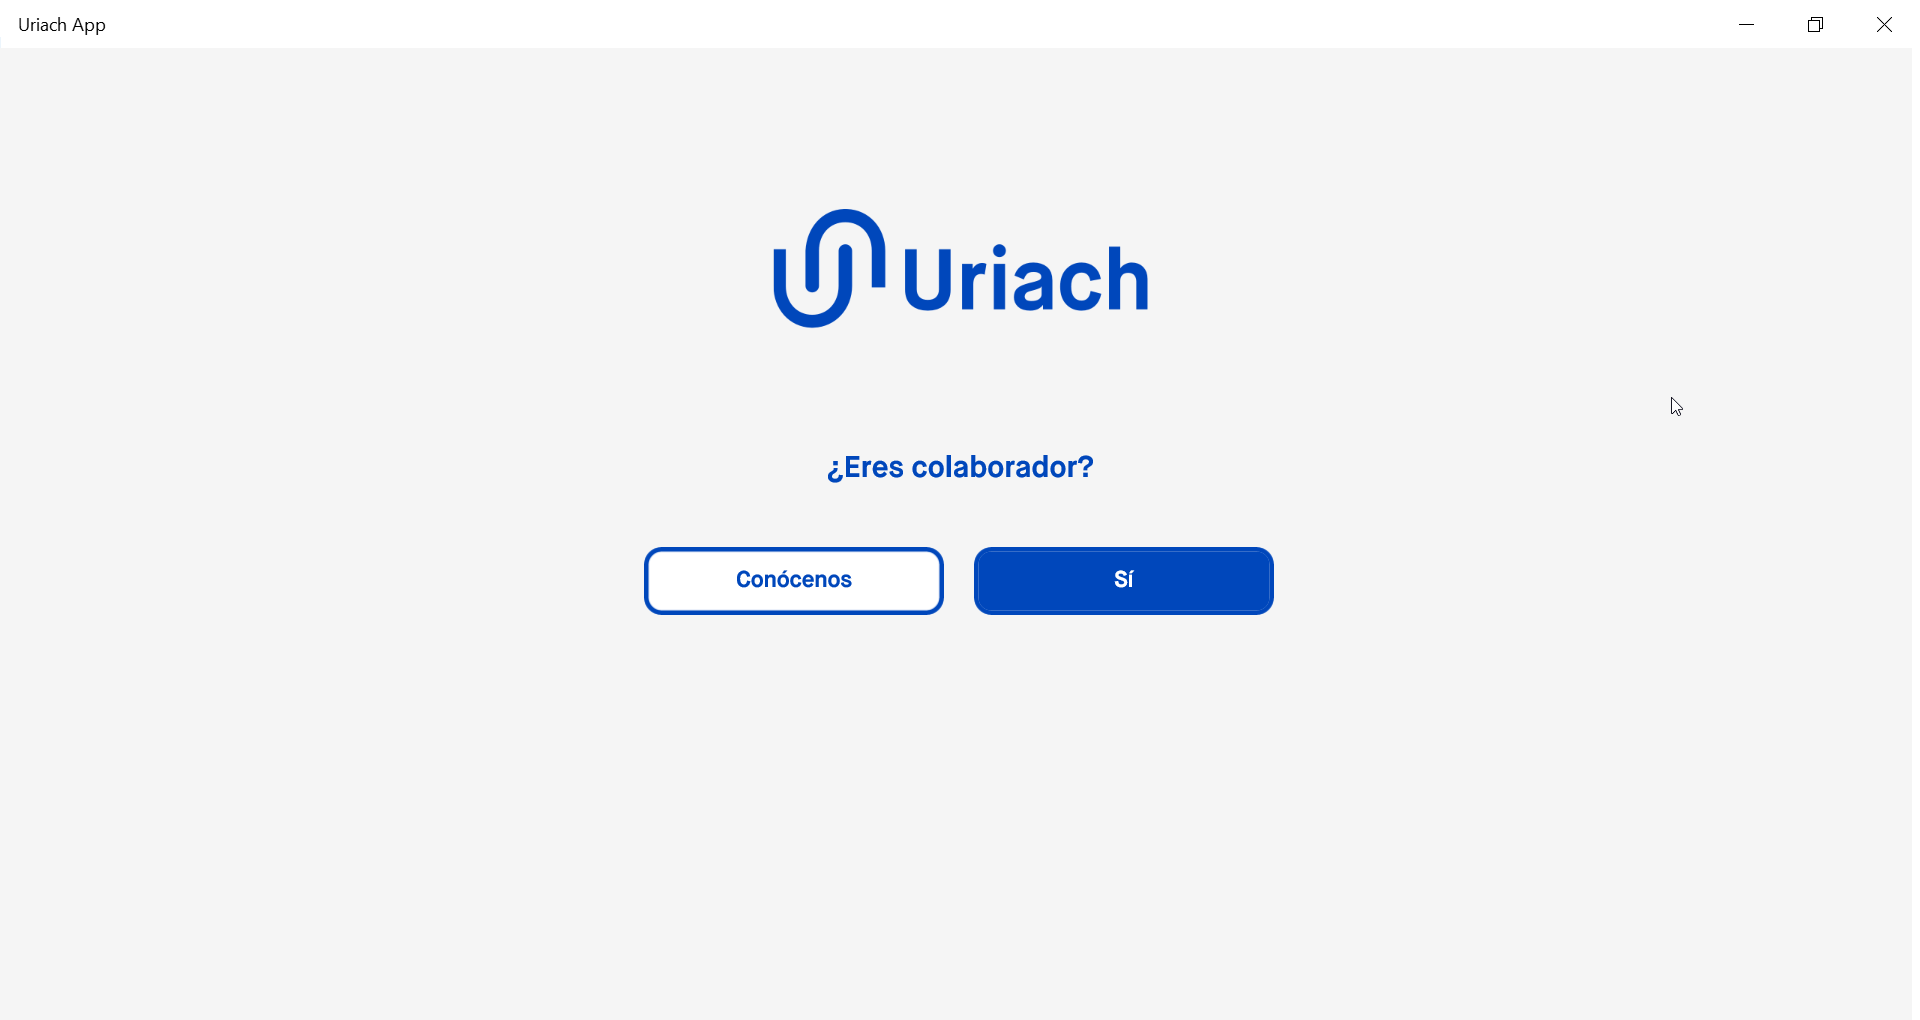 Uriach App